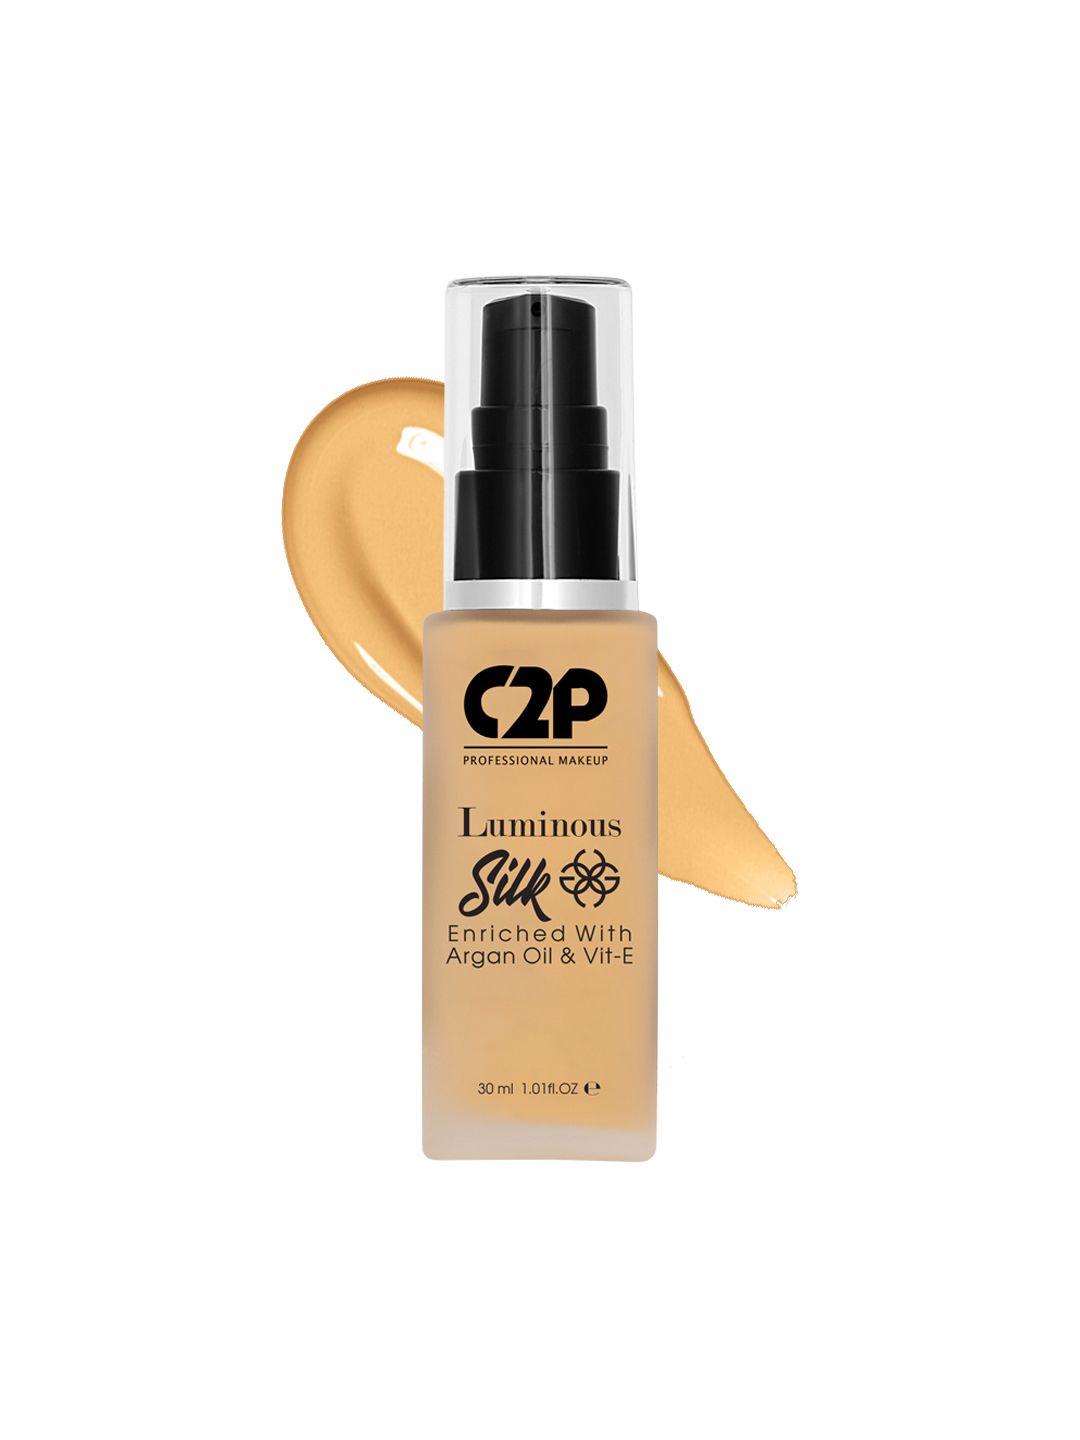 c2p professional makeup luminous silk foundation 30 ml - medium tan 11